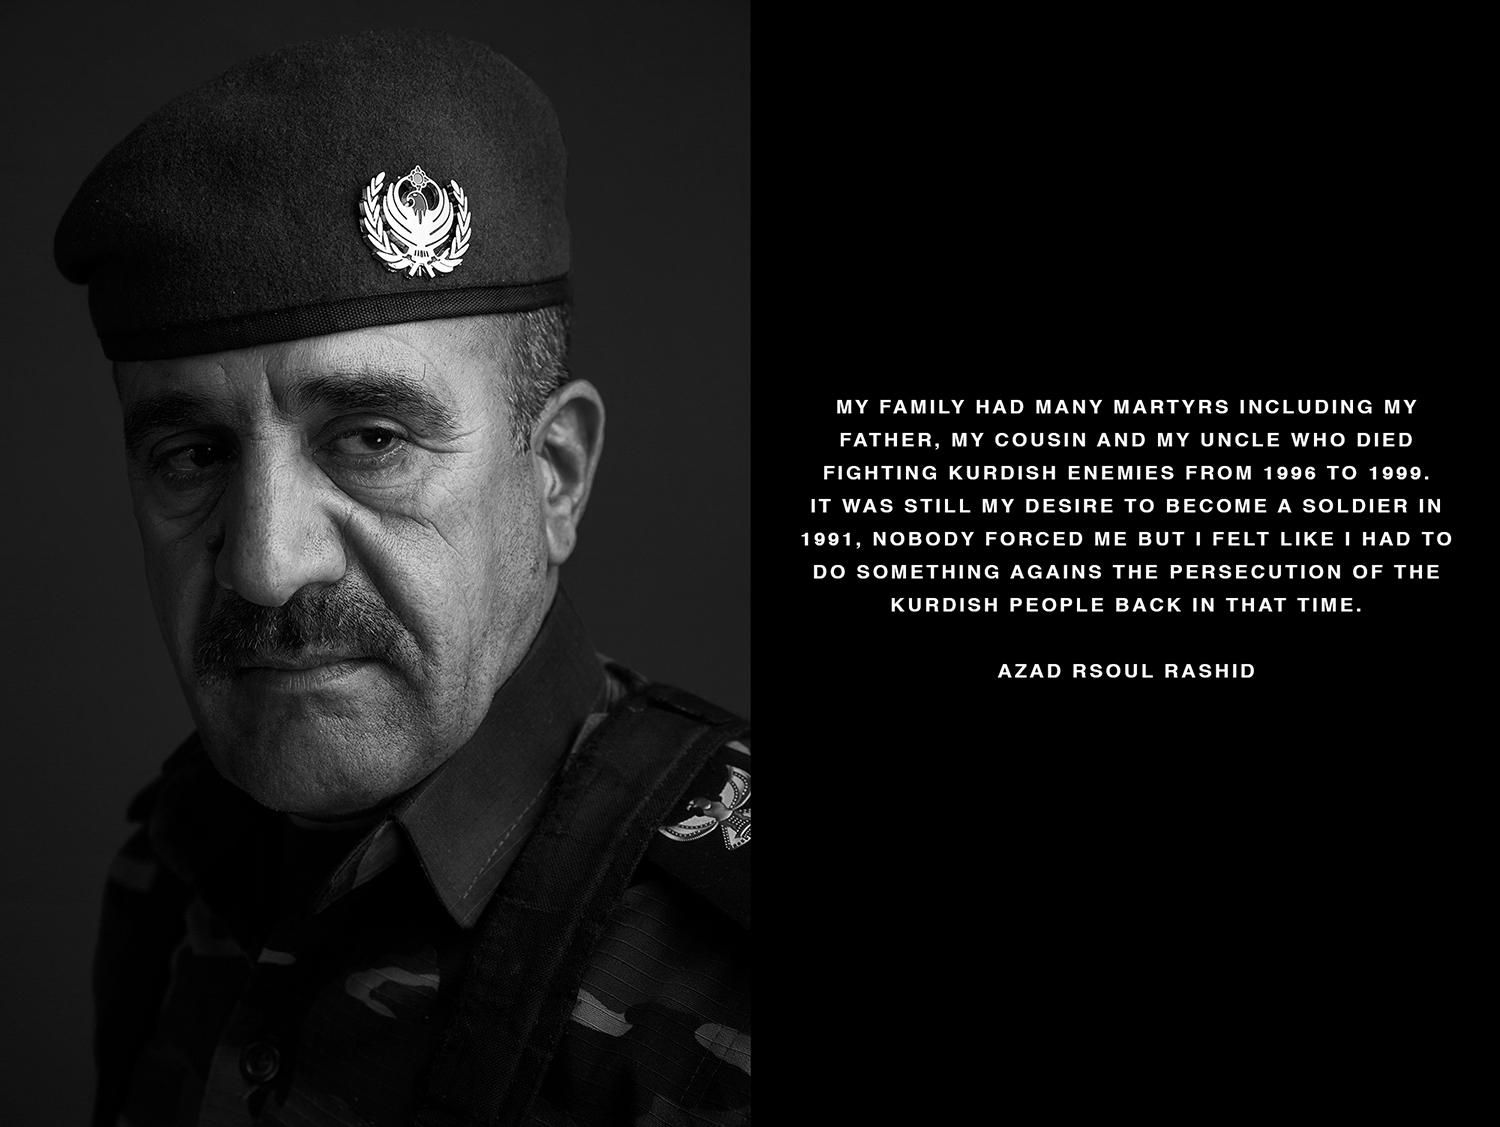 Portrait of a Peshmerga soldier